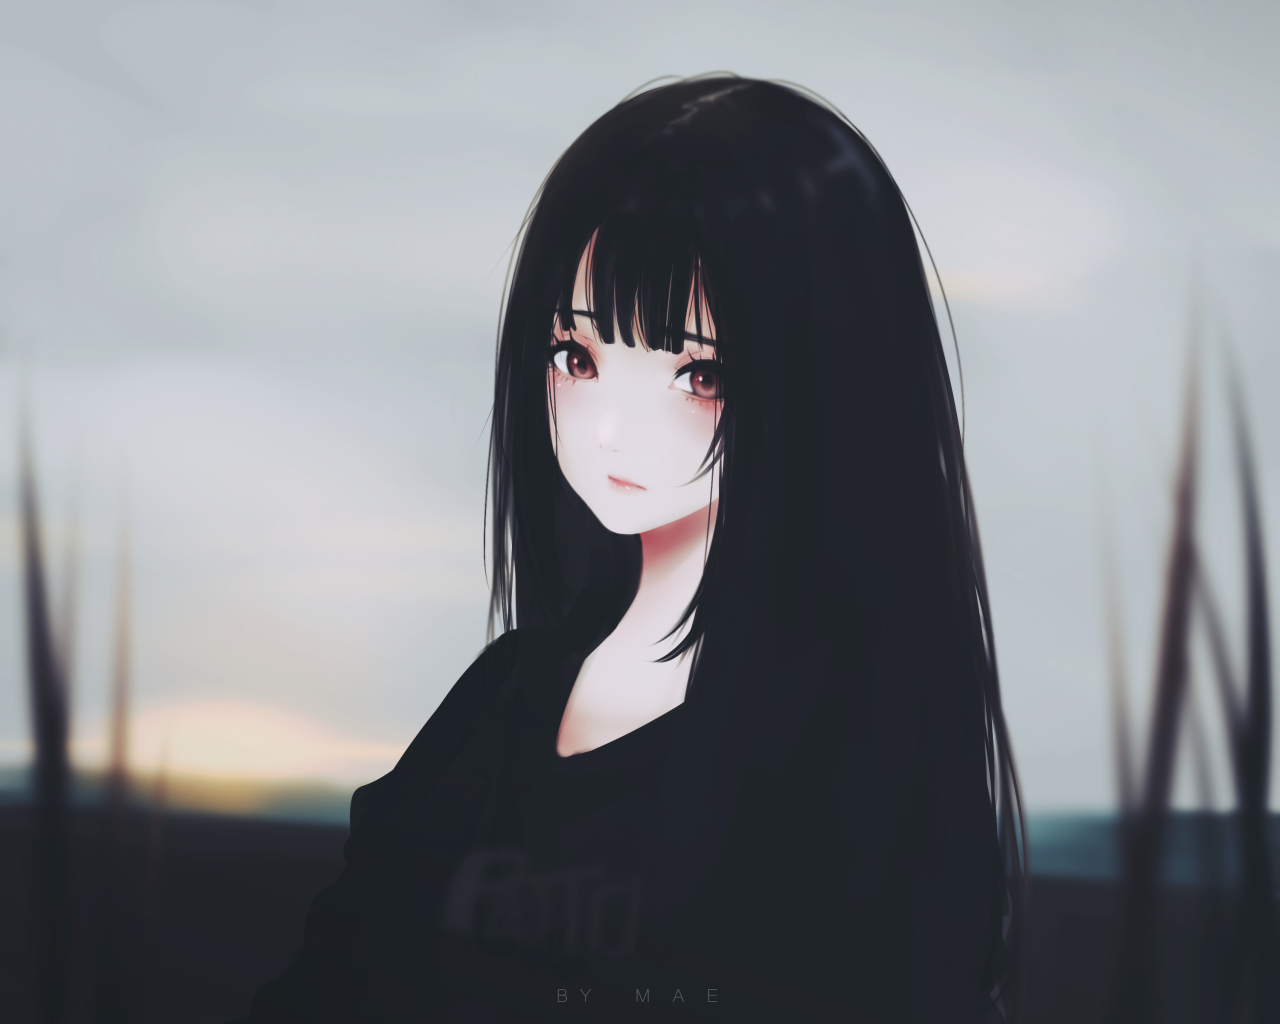 Download 1280x1024 Anime Girl, Black Hair, Sad Expression, Semi Realistic Wallpaper